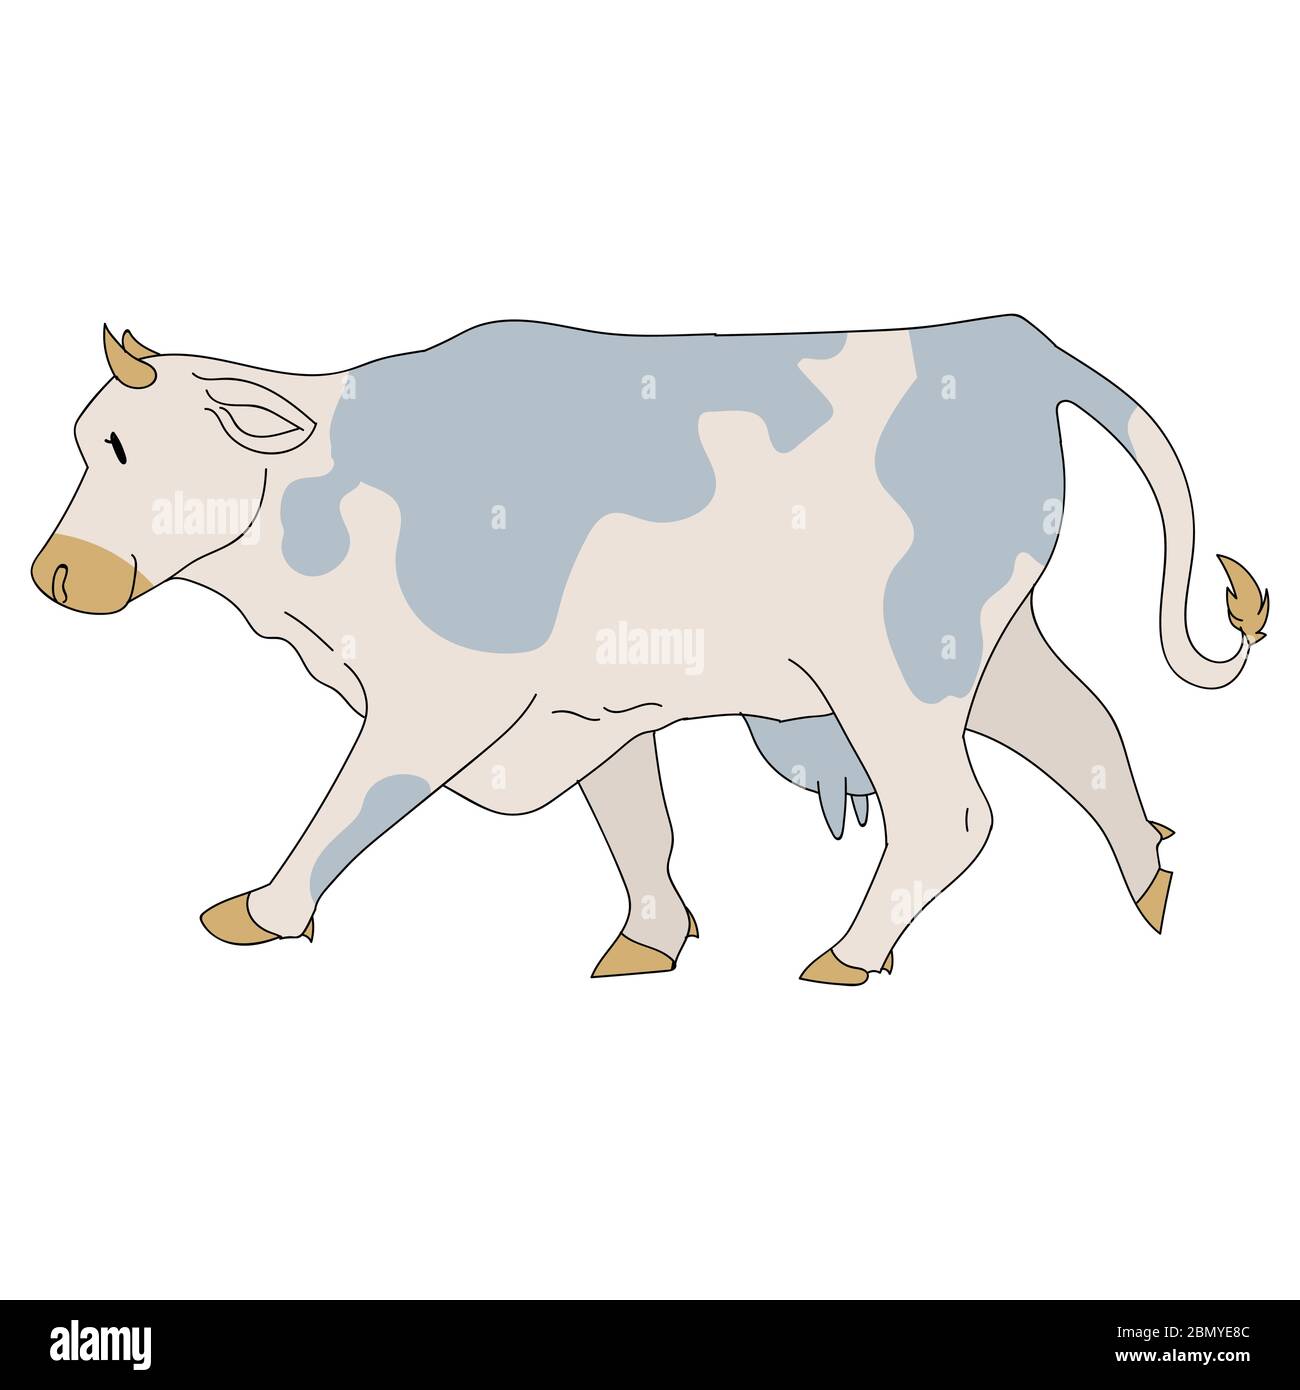 Cute french farmhouse cow vector clipart. Hand drawn shabby chic style country farm kitchen. Illustration of bovine farm animal livestock ranch Stock Vector